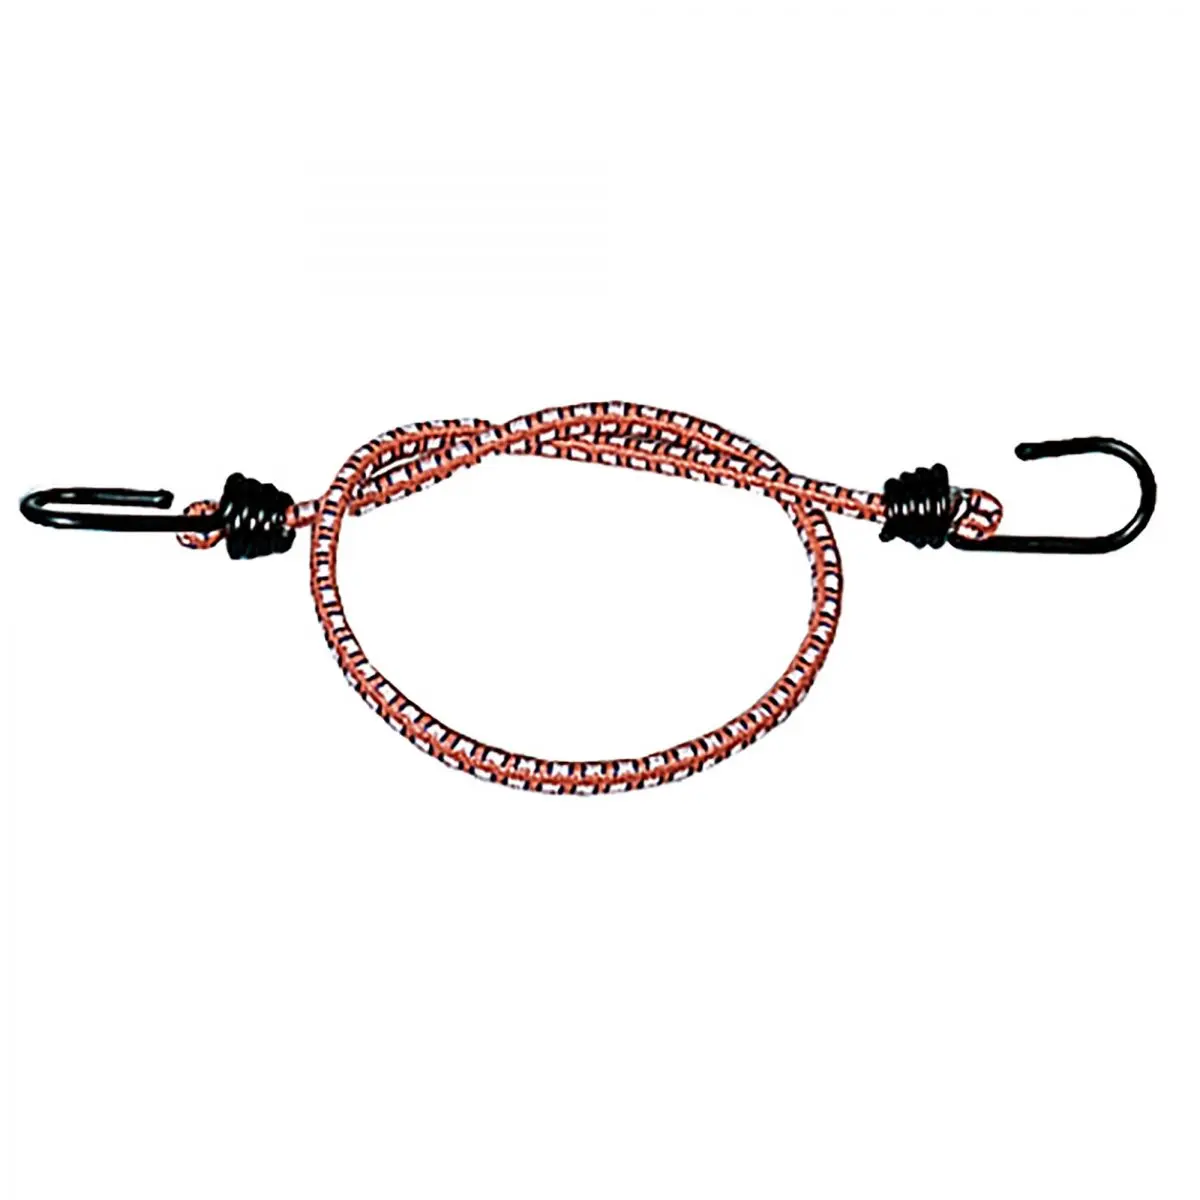 Cablu de tensionare elastic - 60 cm, in ambalaj autoservire